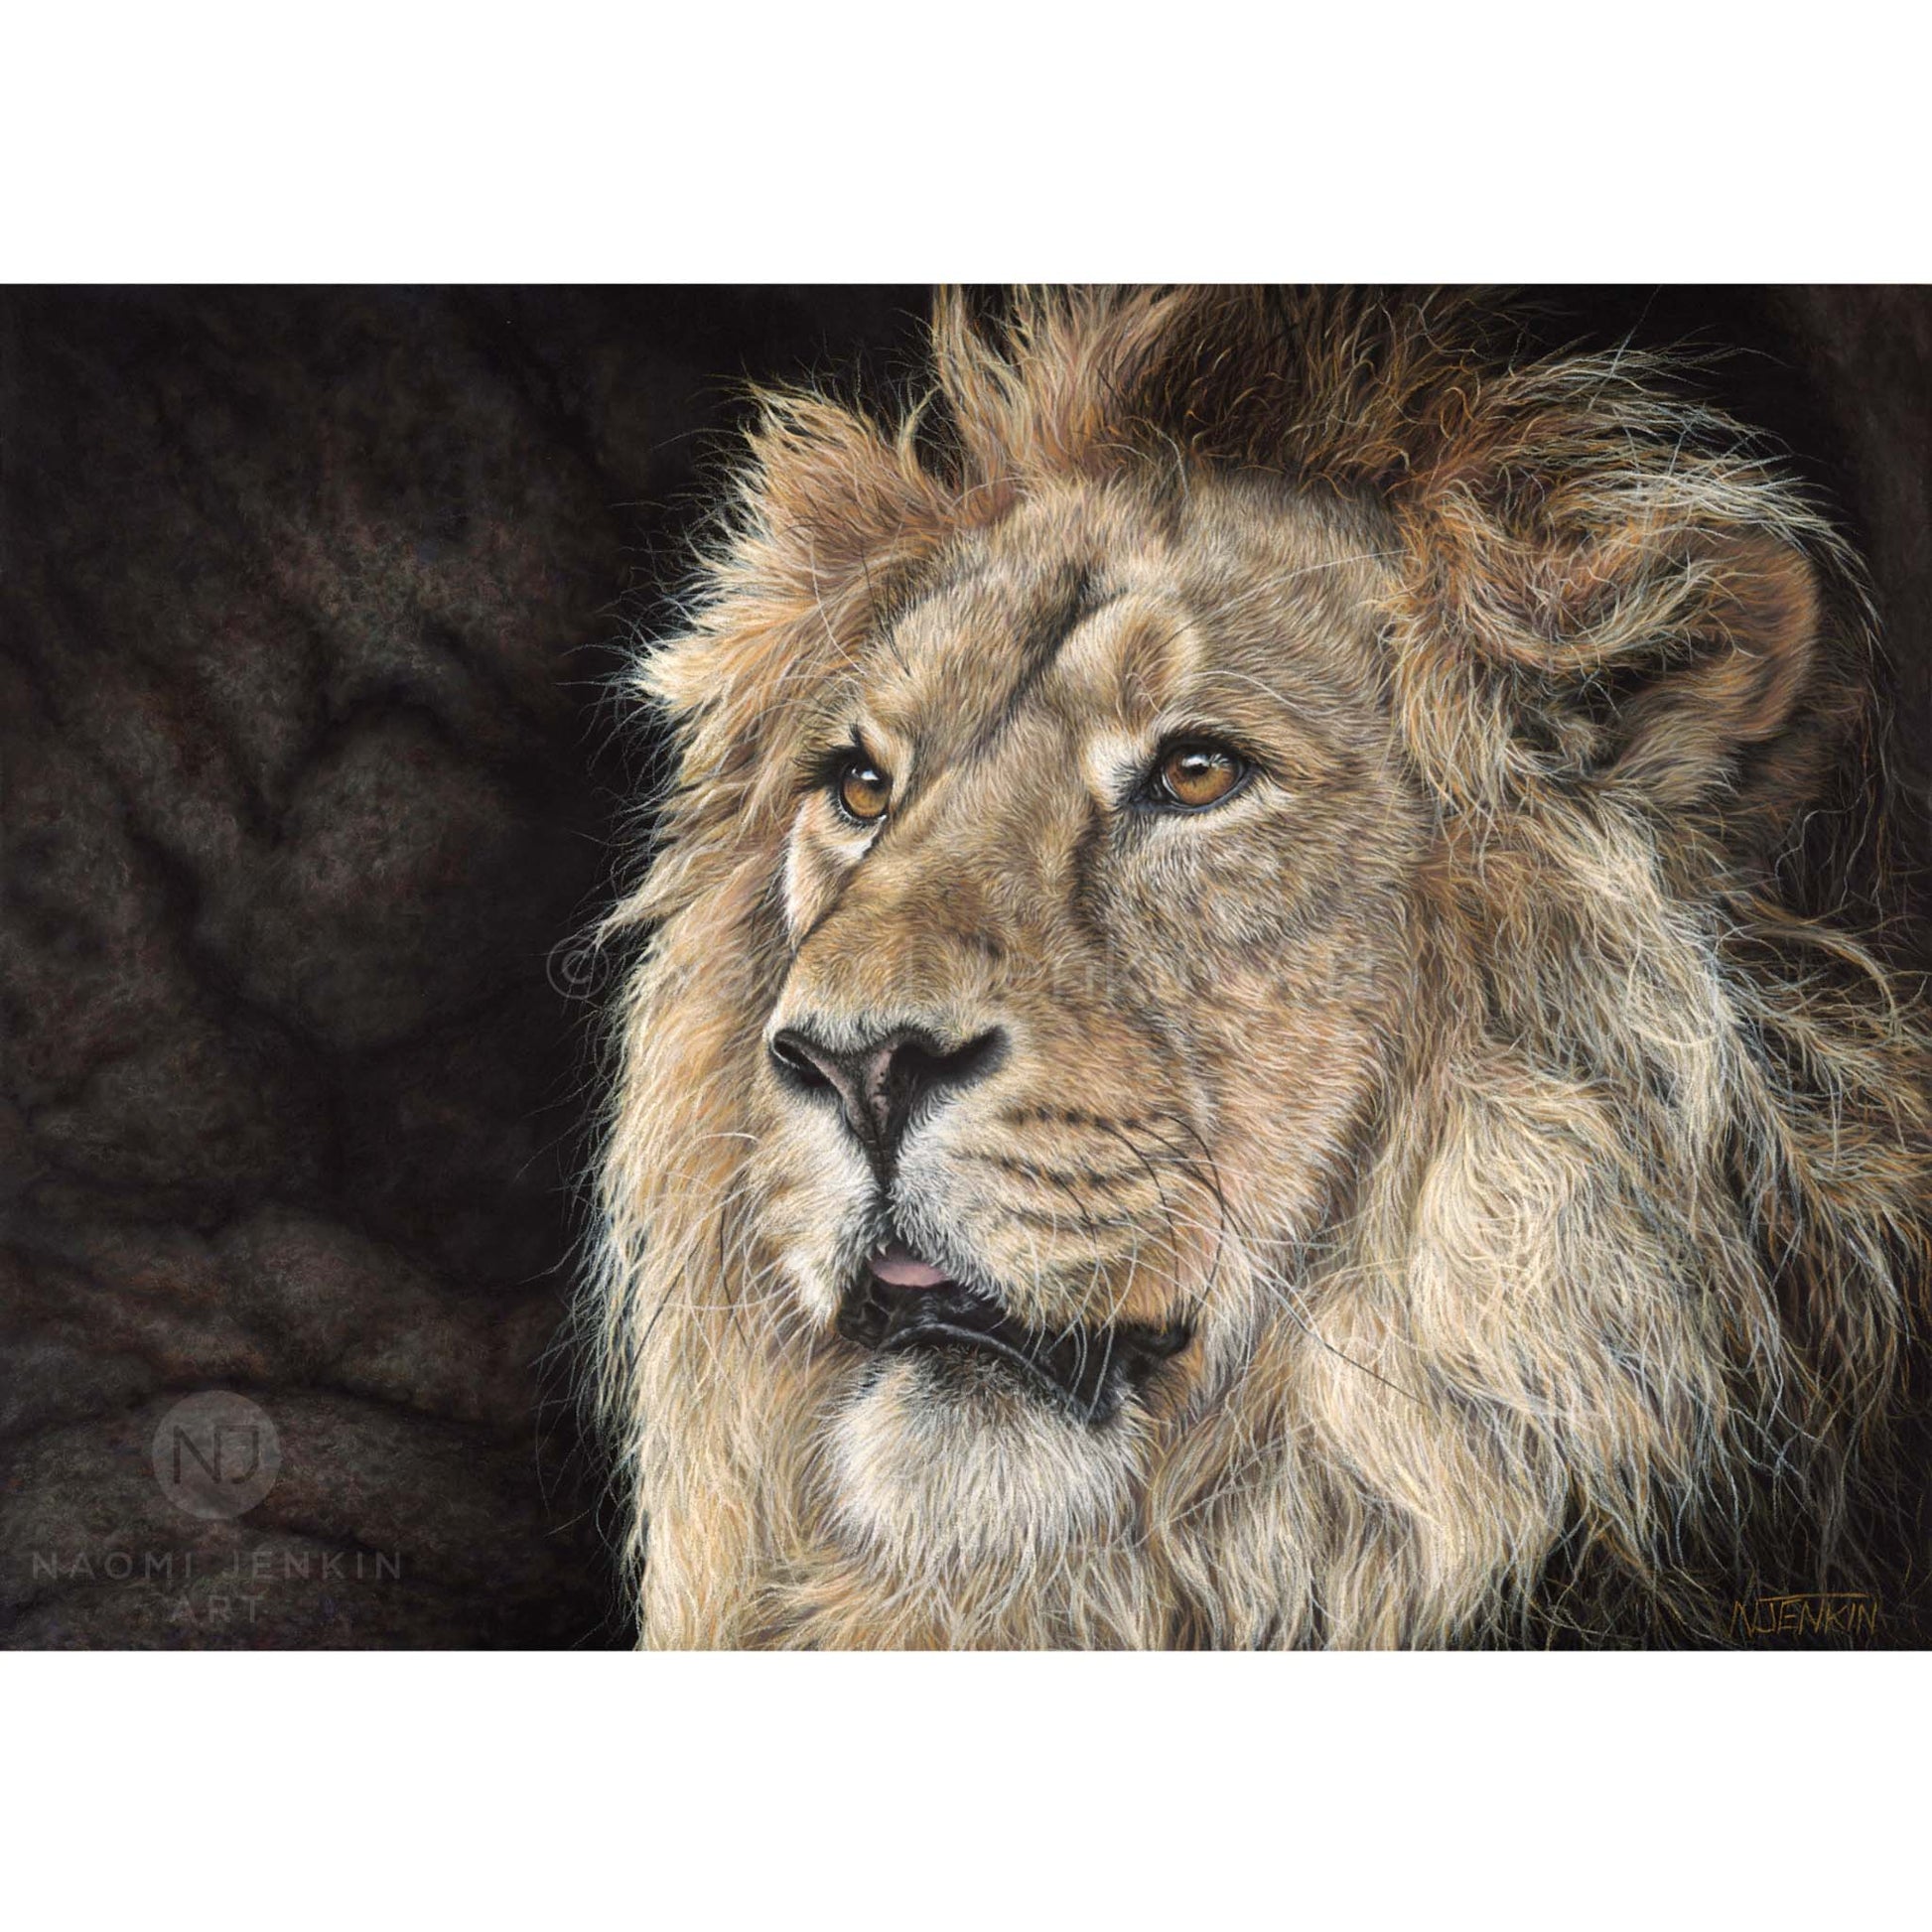 Original lion painting 'Watchful Eyes' by wildlife artist Naomi Jenkin